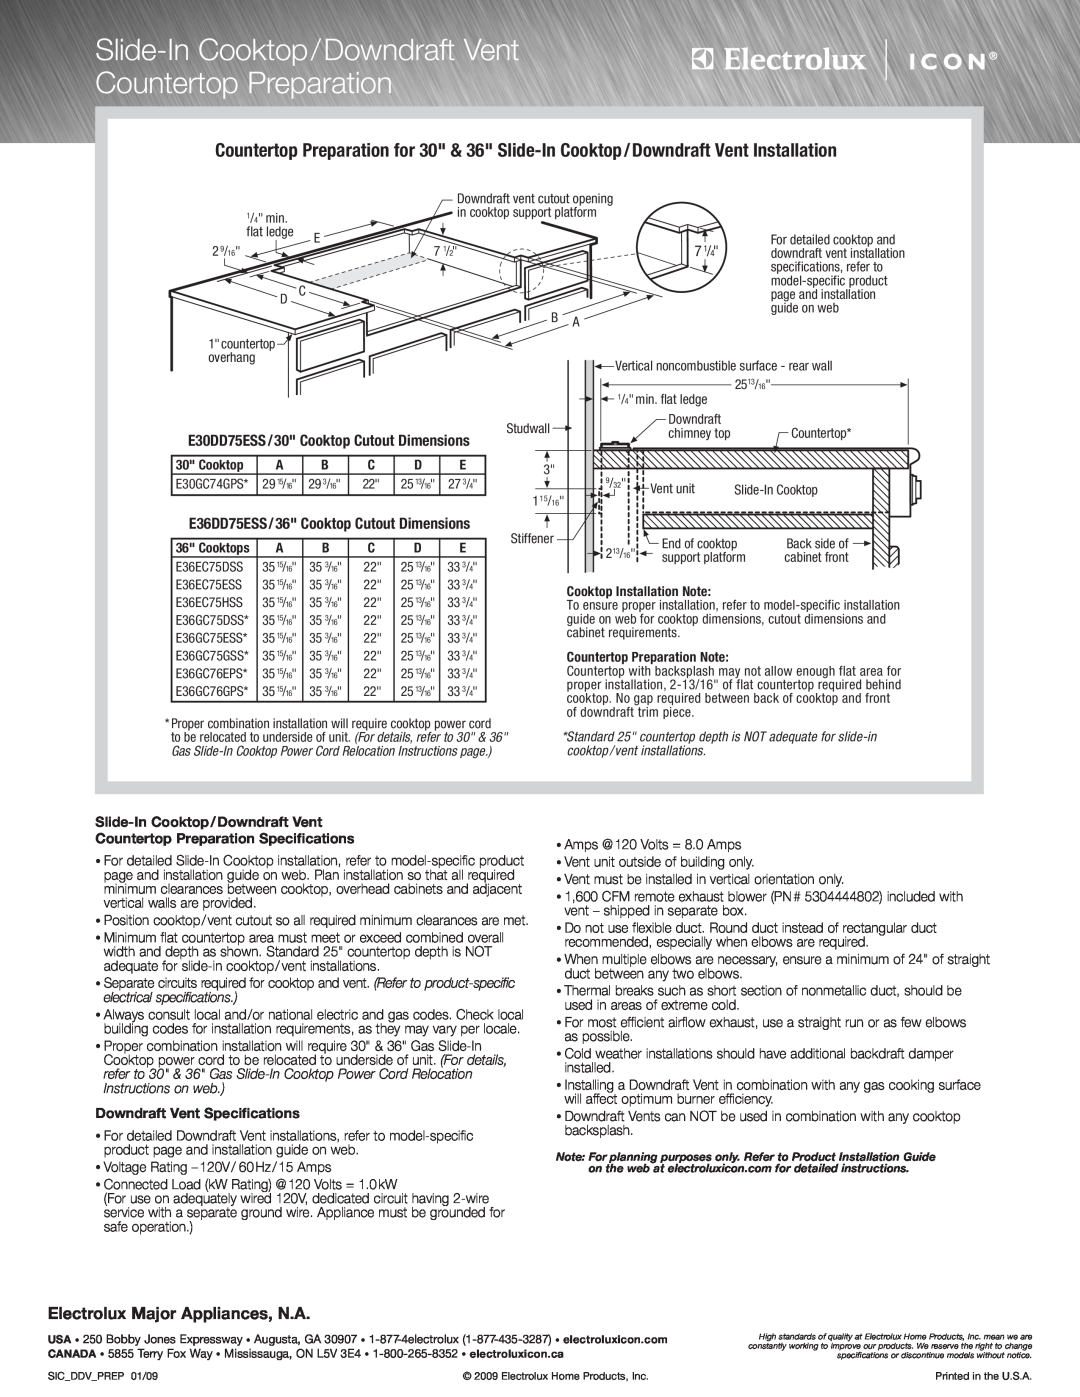 Electrolux E36EC75DSS Slide-In Cooktop/Downdraft Vent Countertop Preparation, E30DD75ESS/30 Cooktop Cutout Dimensions 